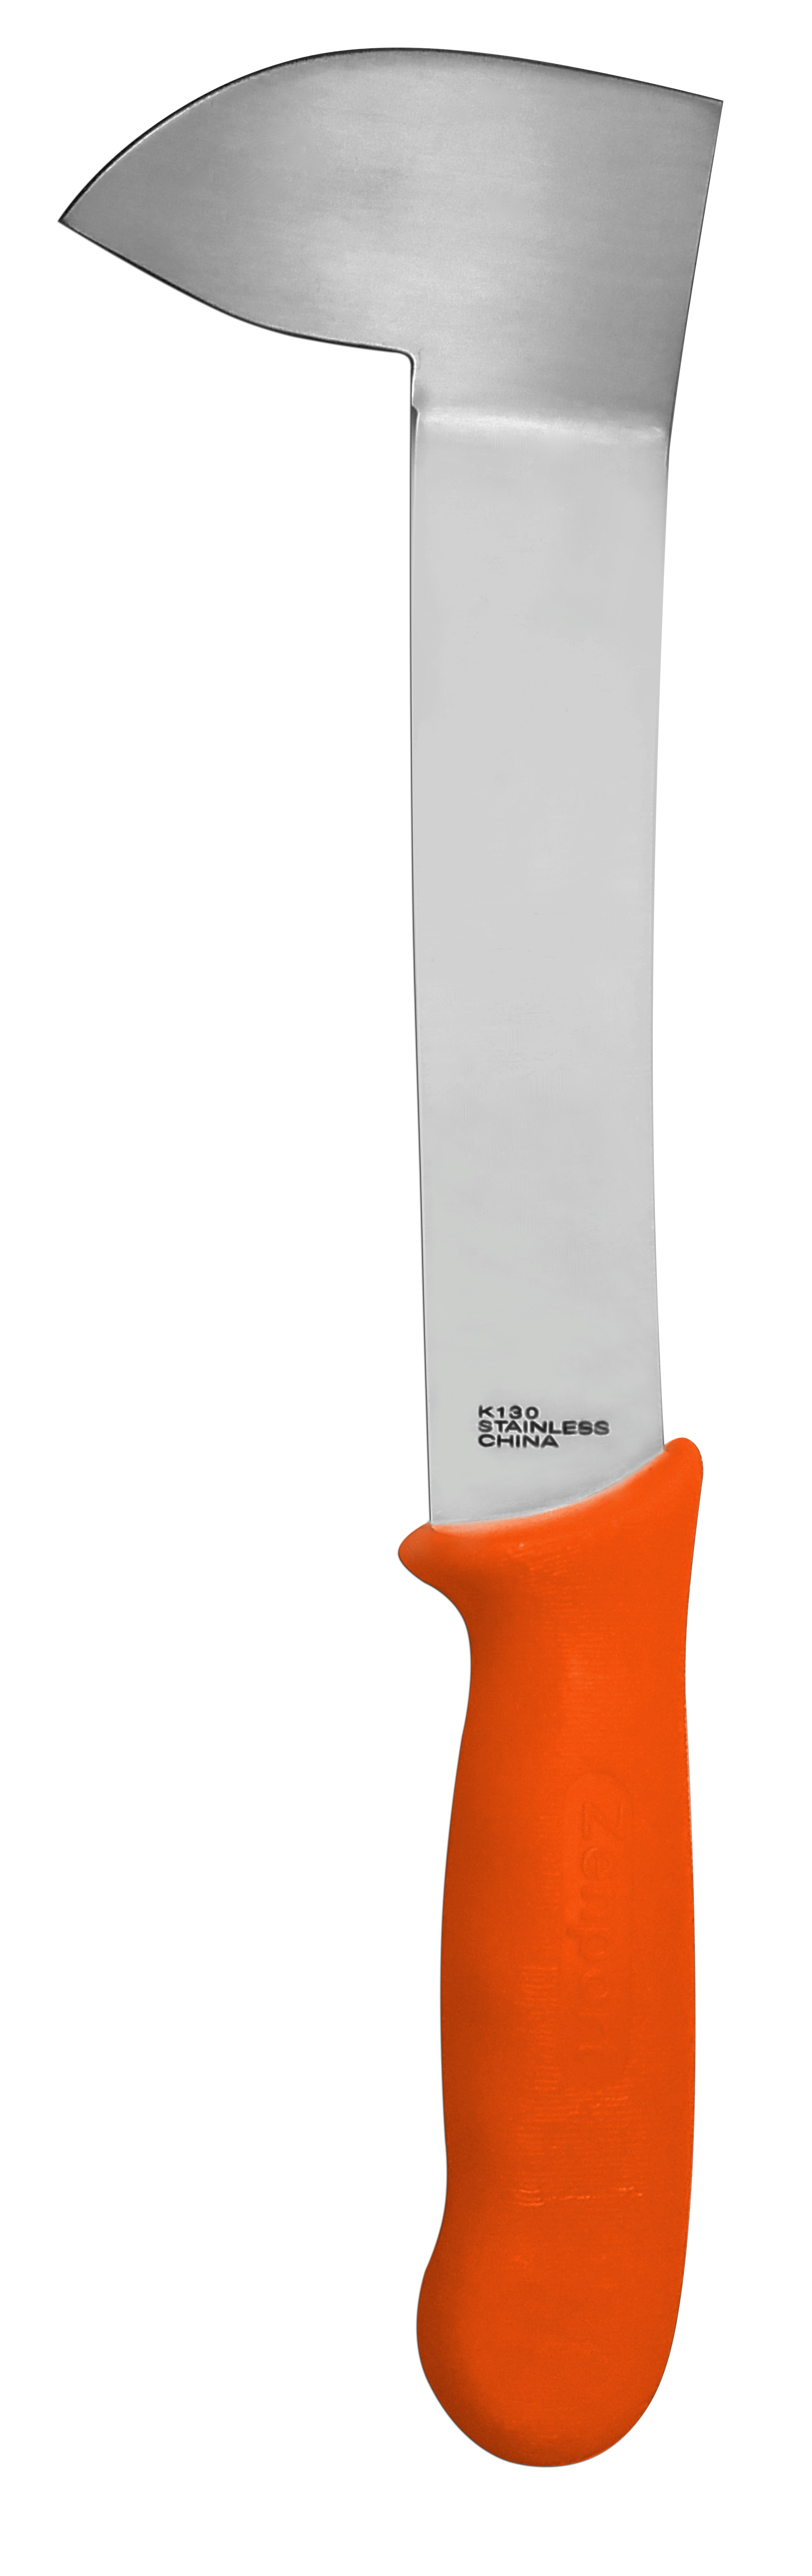 Zenport K130 Cuchillo de apio, hoja de acero inoxidable de 8.5 pulgadas, mango de plástico naranja